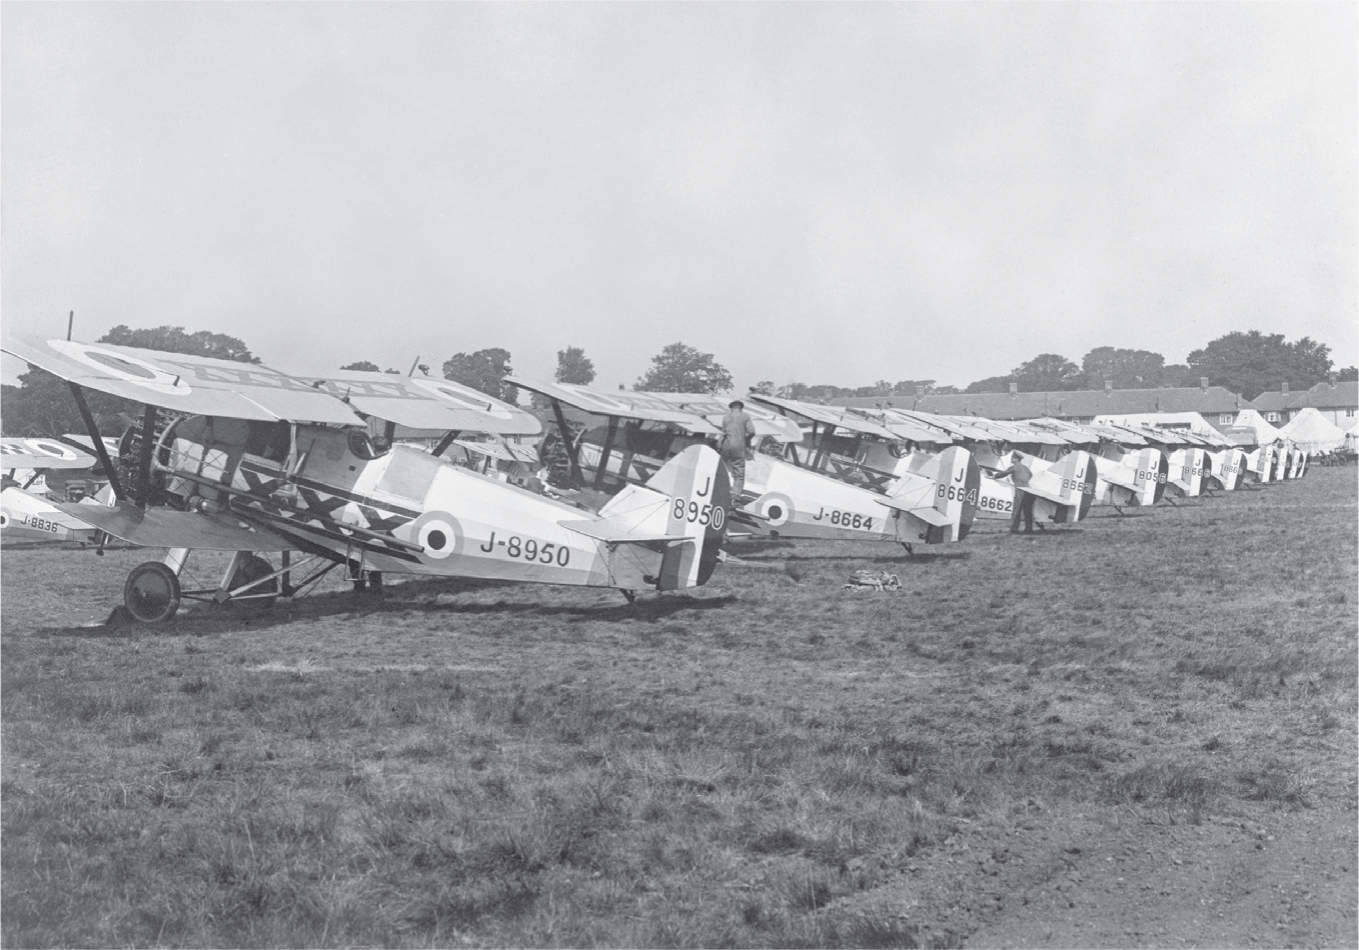 Siskin aircraft lined up at Hendon Air Show 1929 Vickers Victoria - photo 23